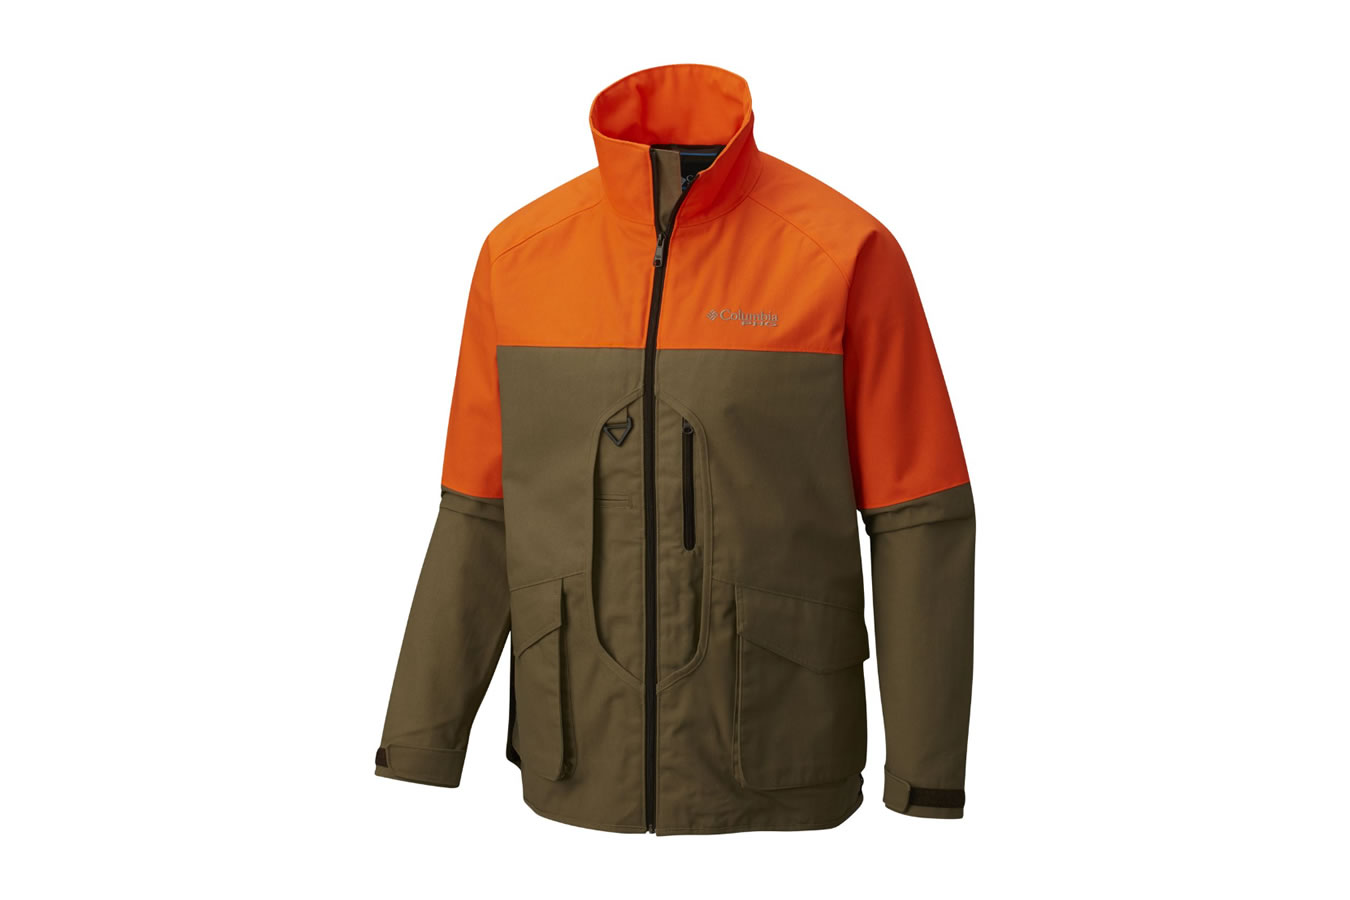 columbia upland hunting jacket